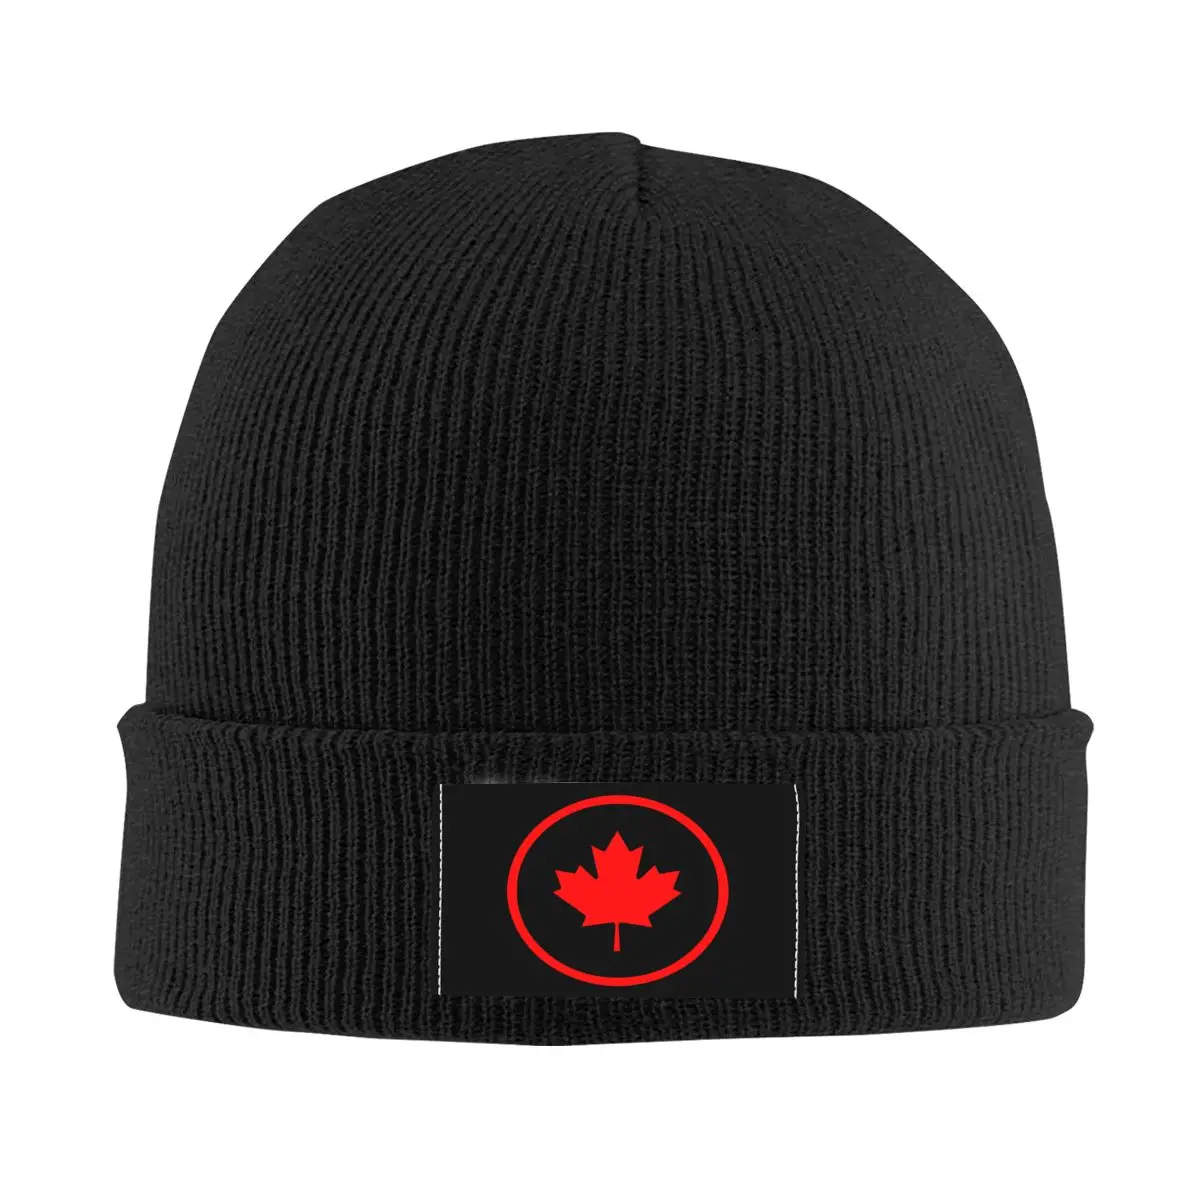 

Canadian Flag Canada Maple Leaf Bonnet Hats Hip Hop Knitted Hat For Men Women Autumn Winter Warm Skullies Beanies Caps